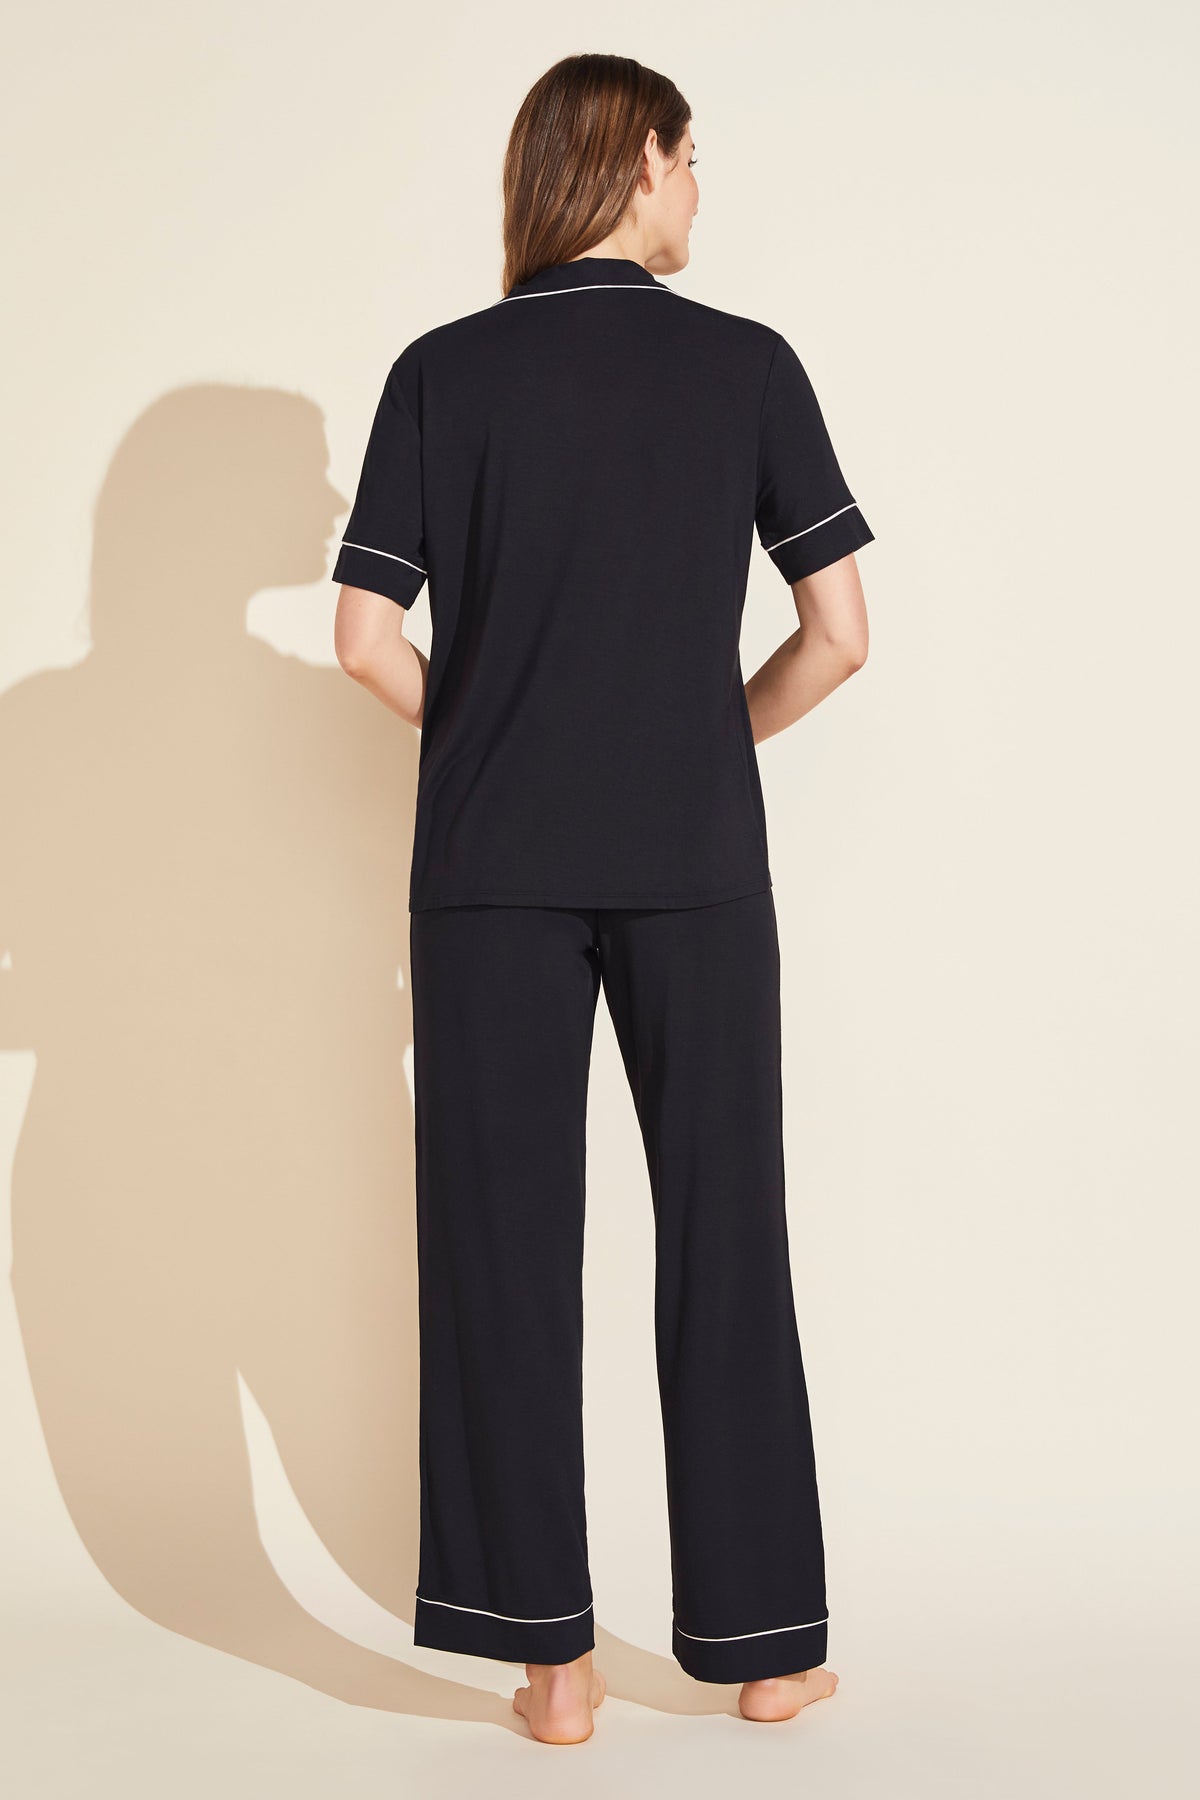 Gisele Short Sleeve Pant PJ Set in Black/Sorbet